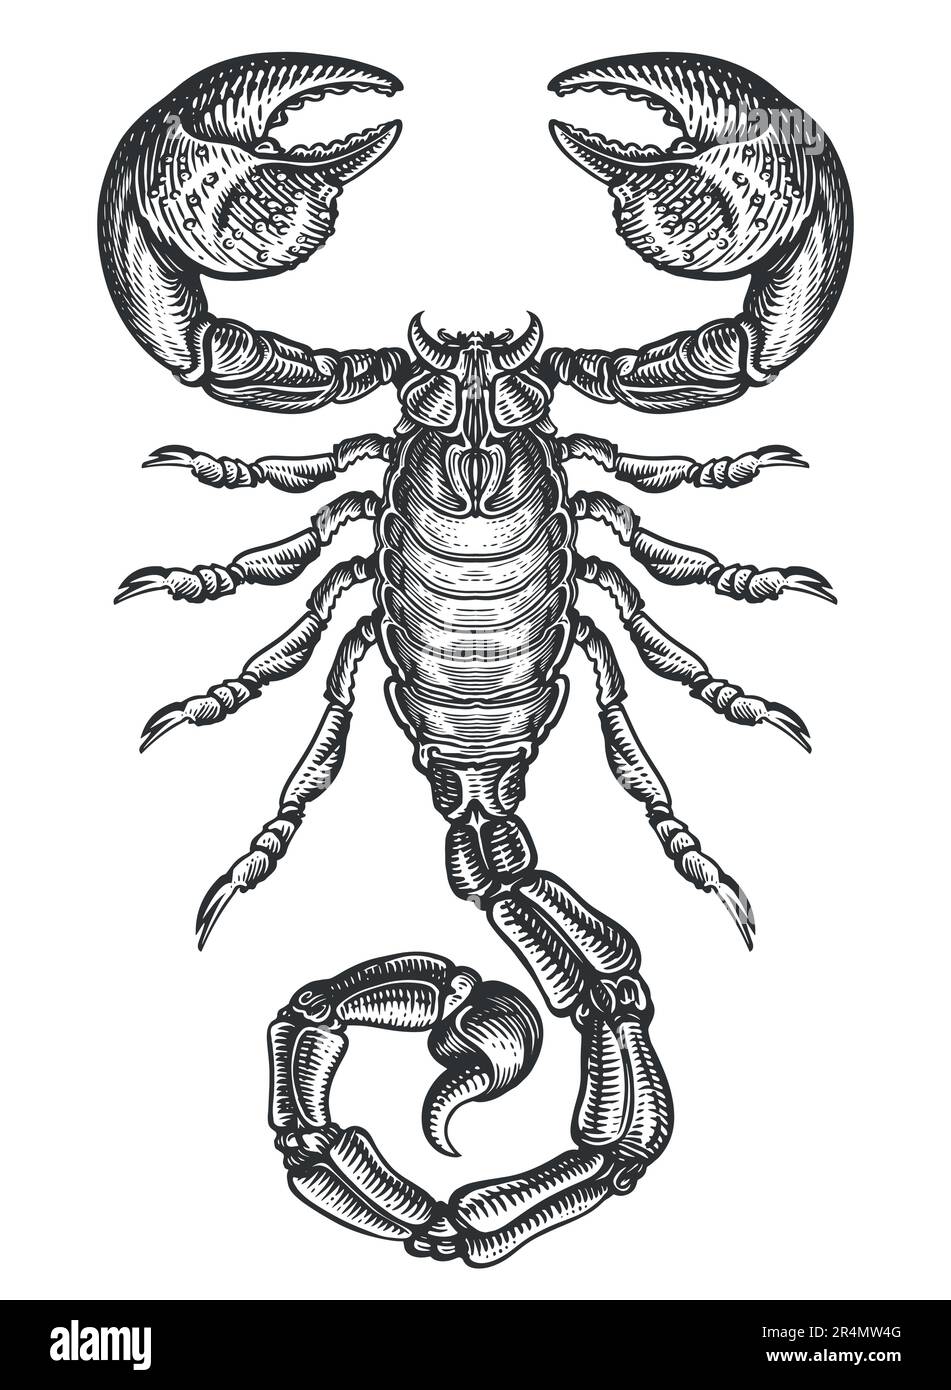 Hand drawing sketch scorpion. Predatory animal in vintage engraving style. Vector illustration Stock Vector